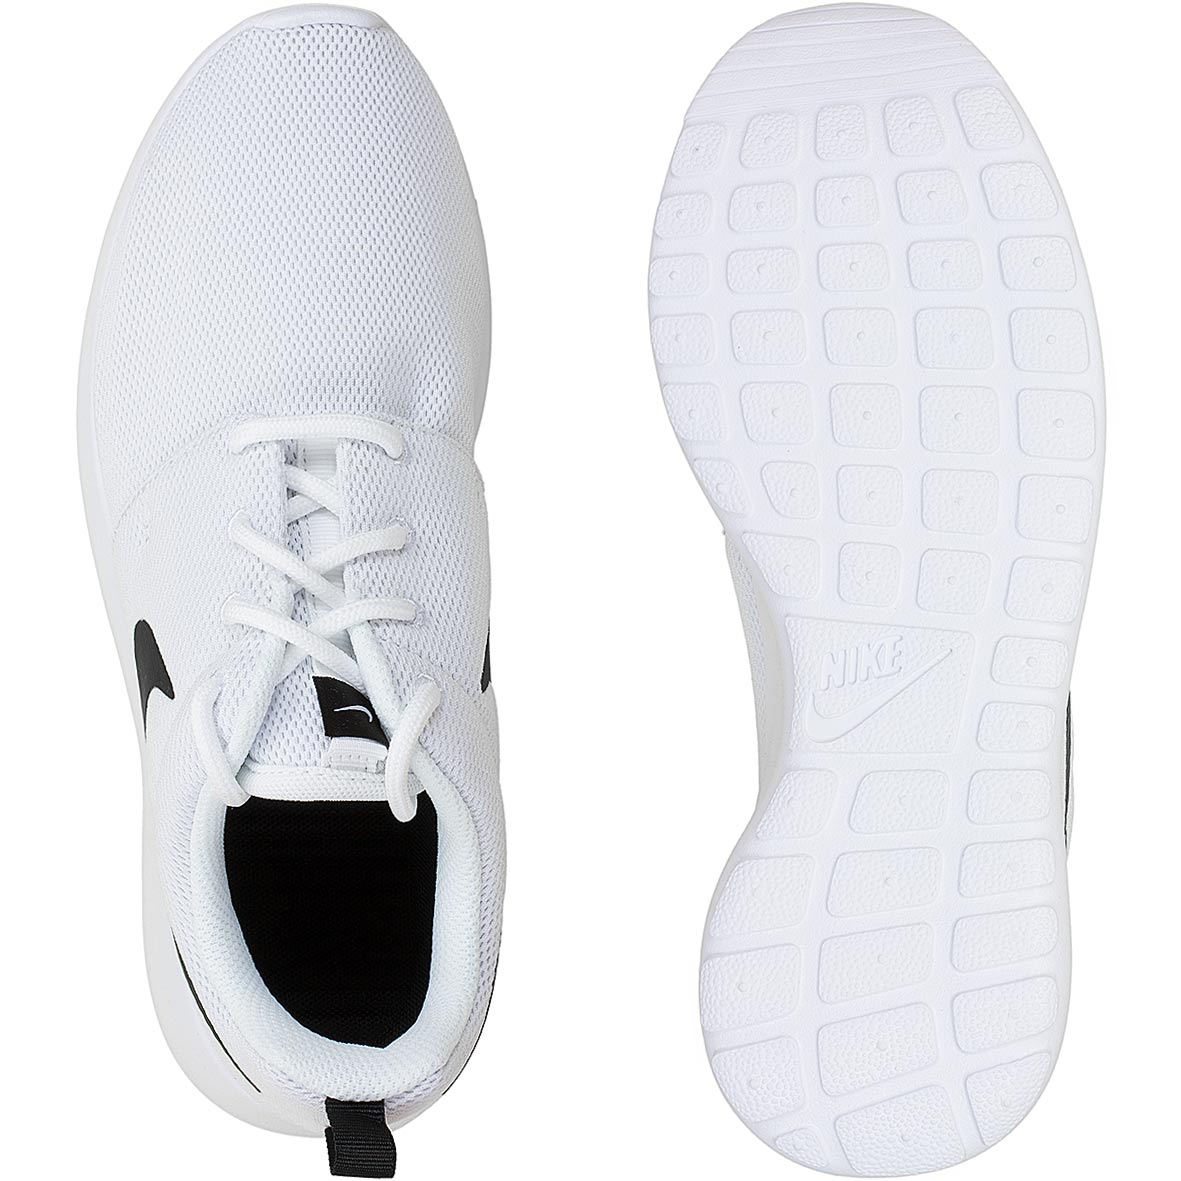 ☆ Nike Damen Sneaker Roshe One weiß/schwarz - hier bestellen!